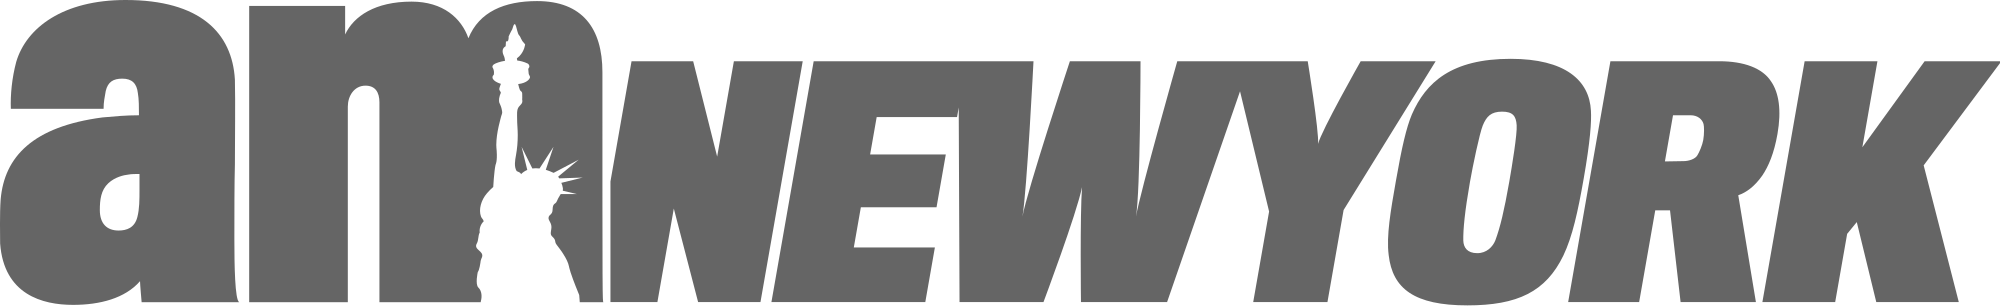 KeVita Logo - KeVita//Golin Year In Review